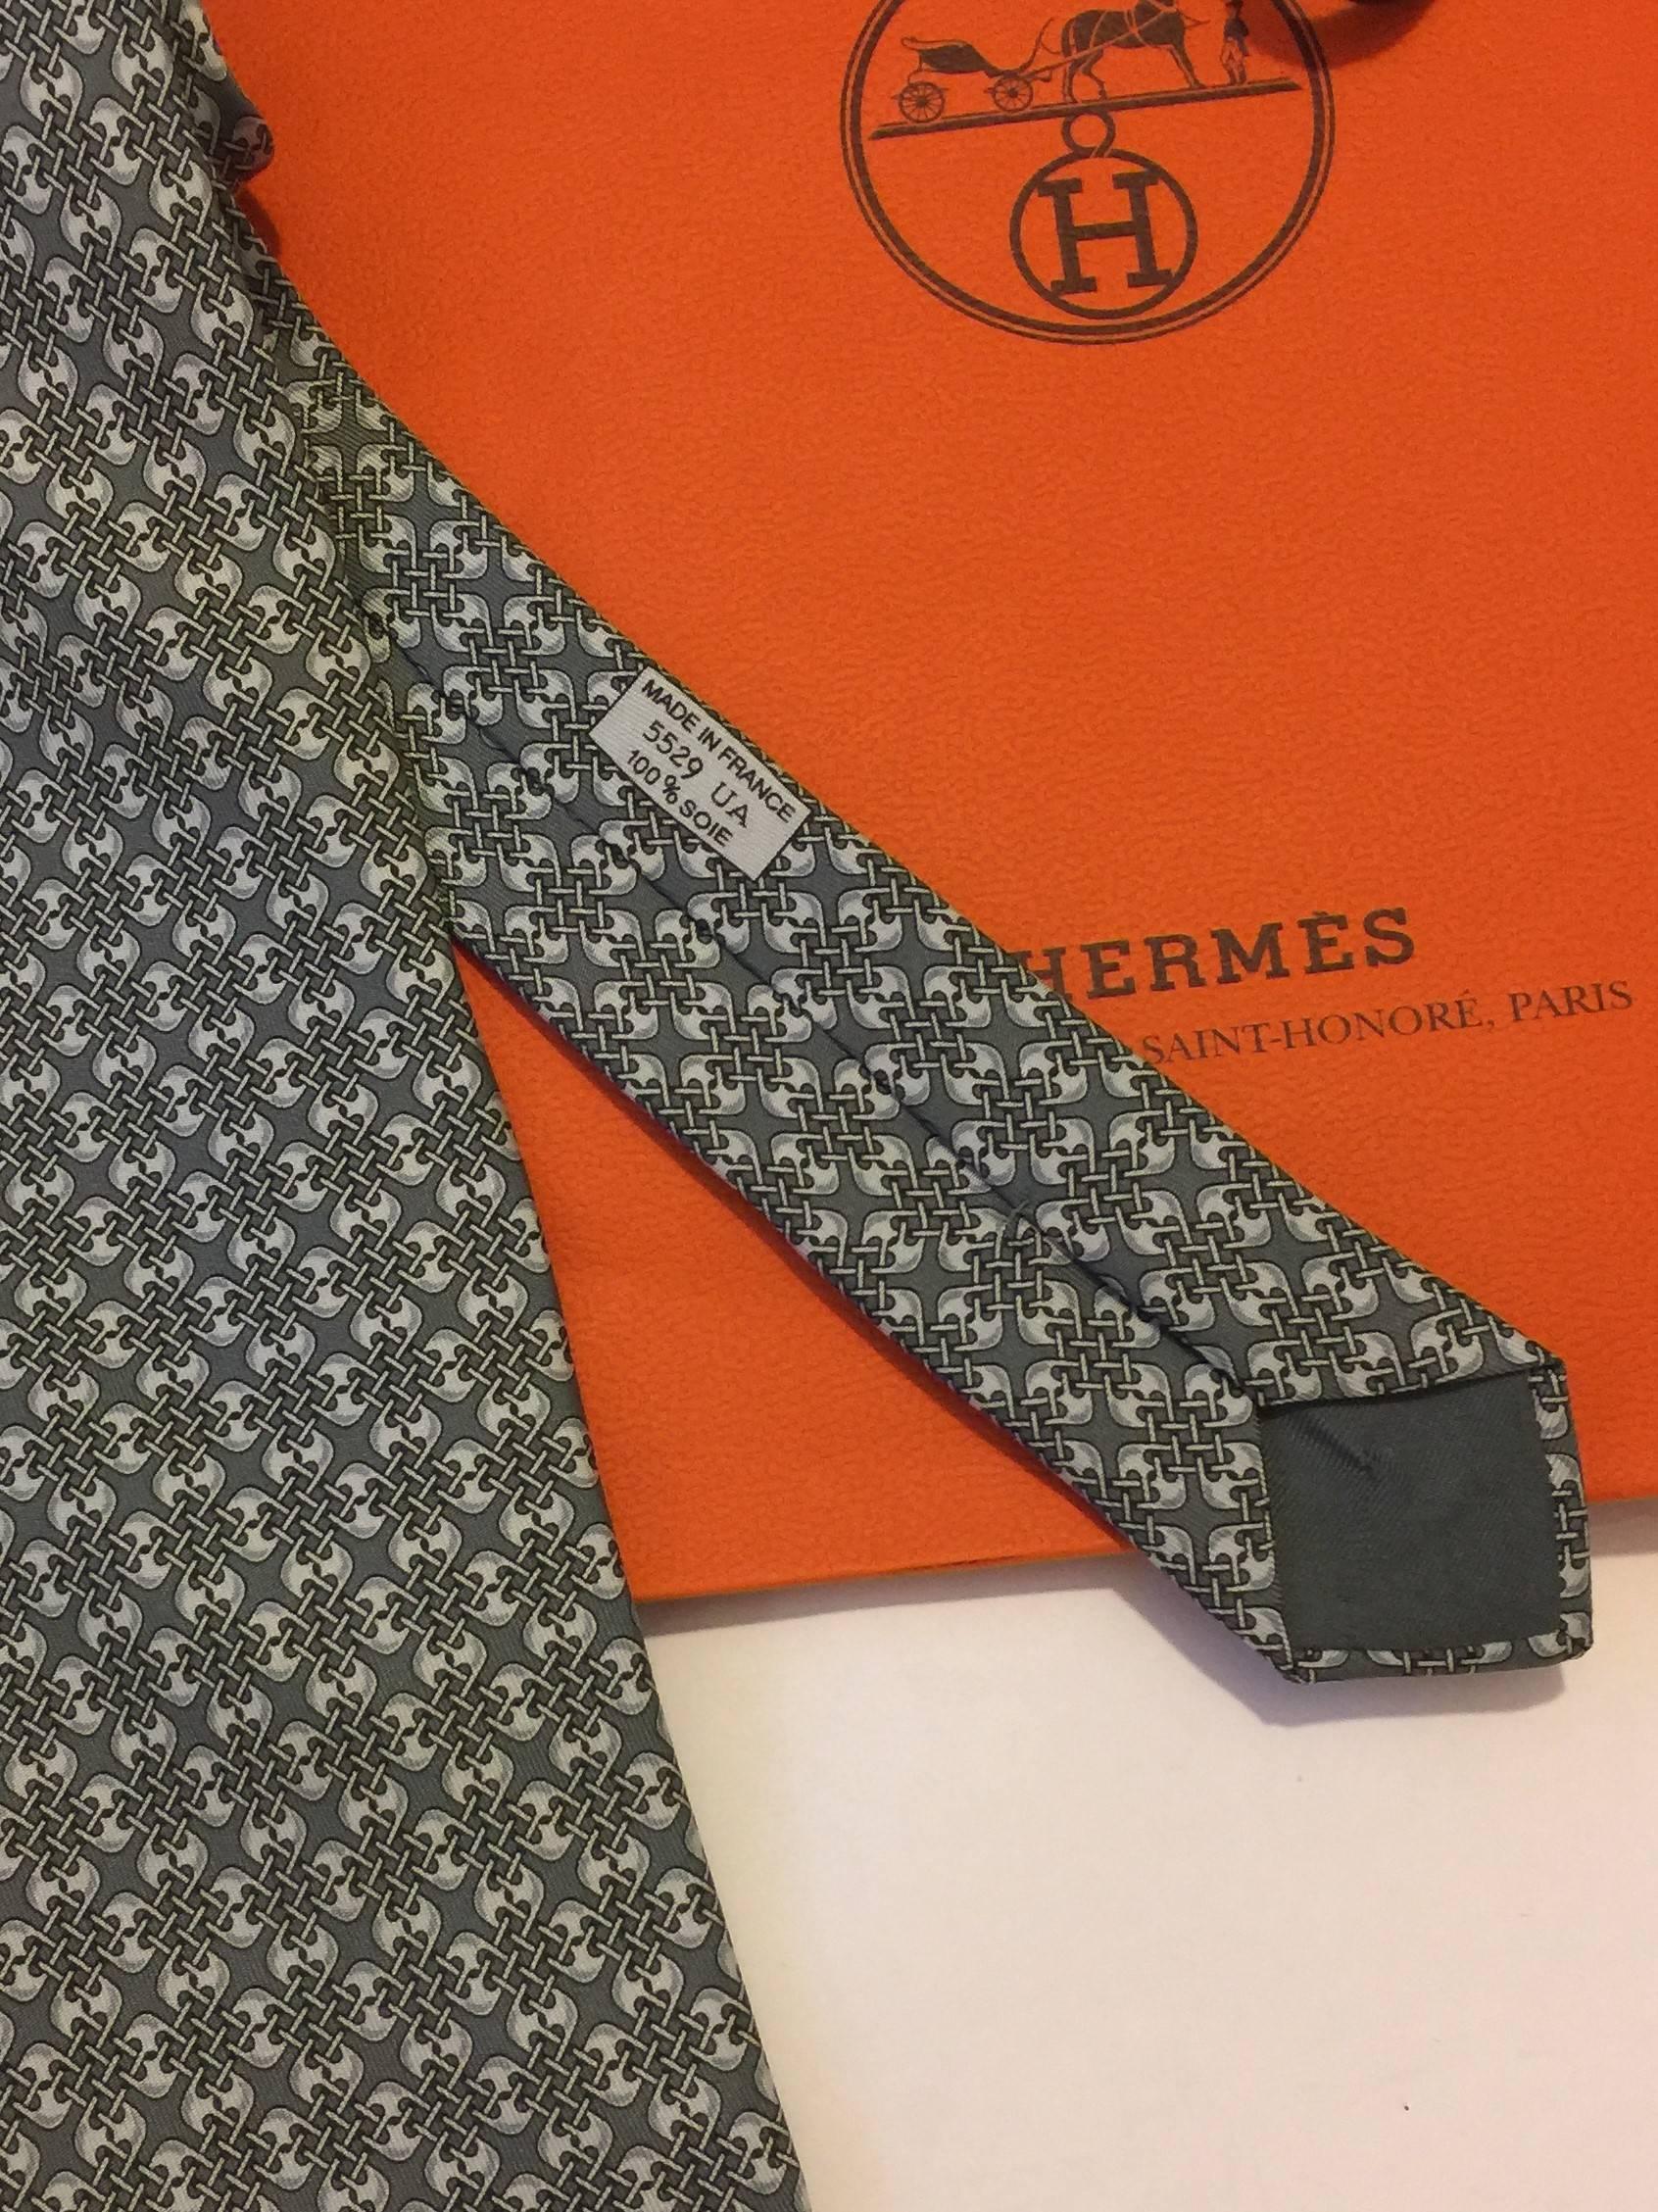 HERMES Paris Classic Men’s Tie.  2